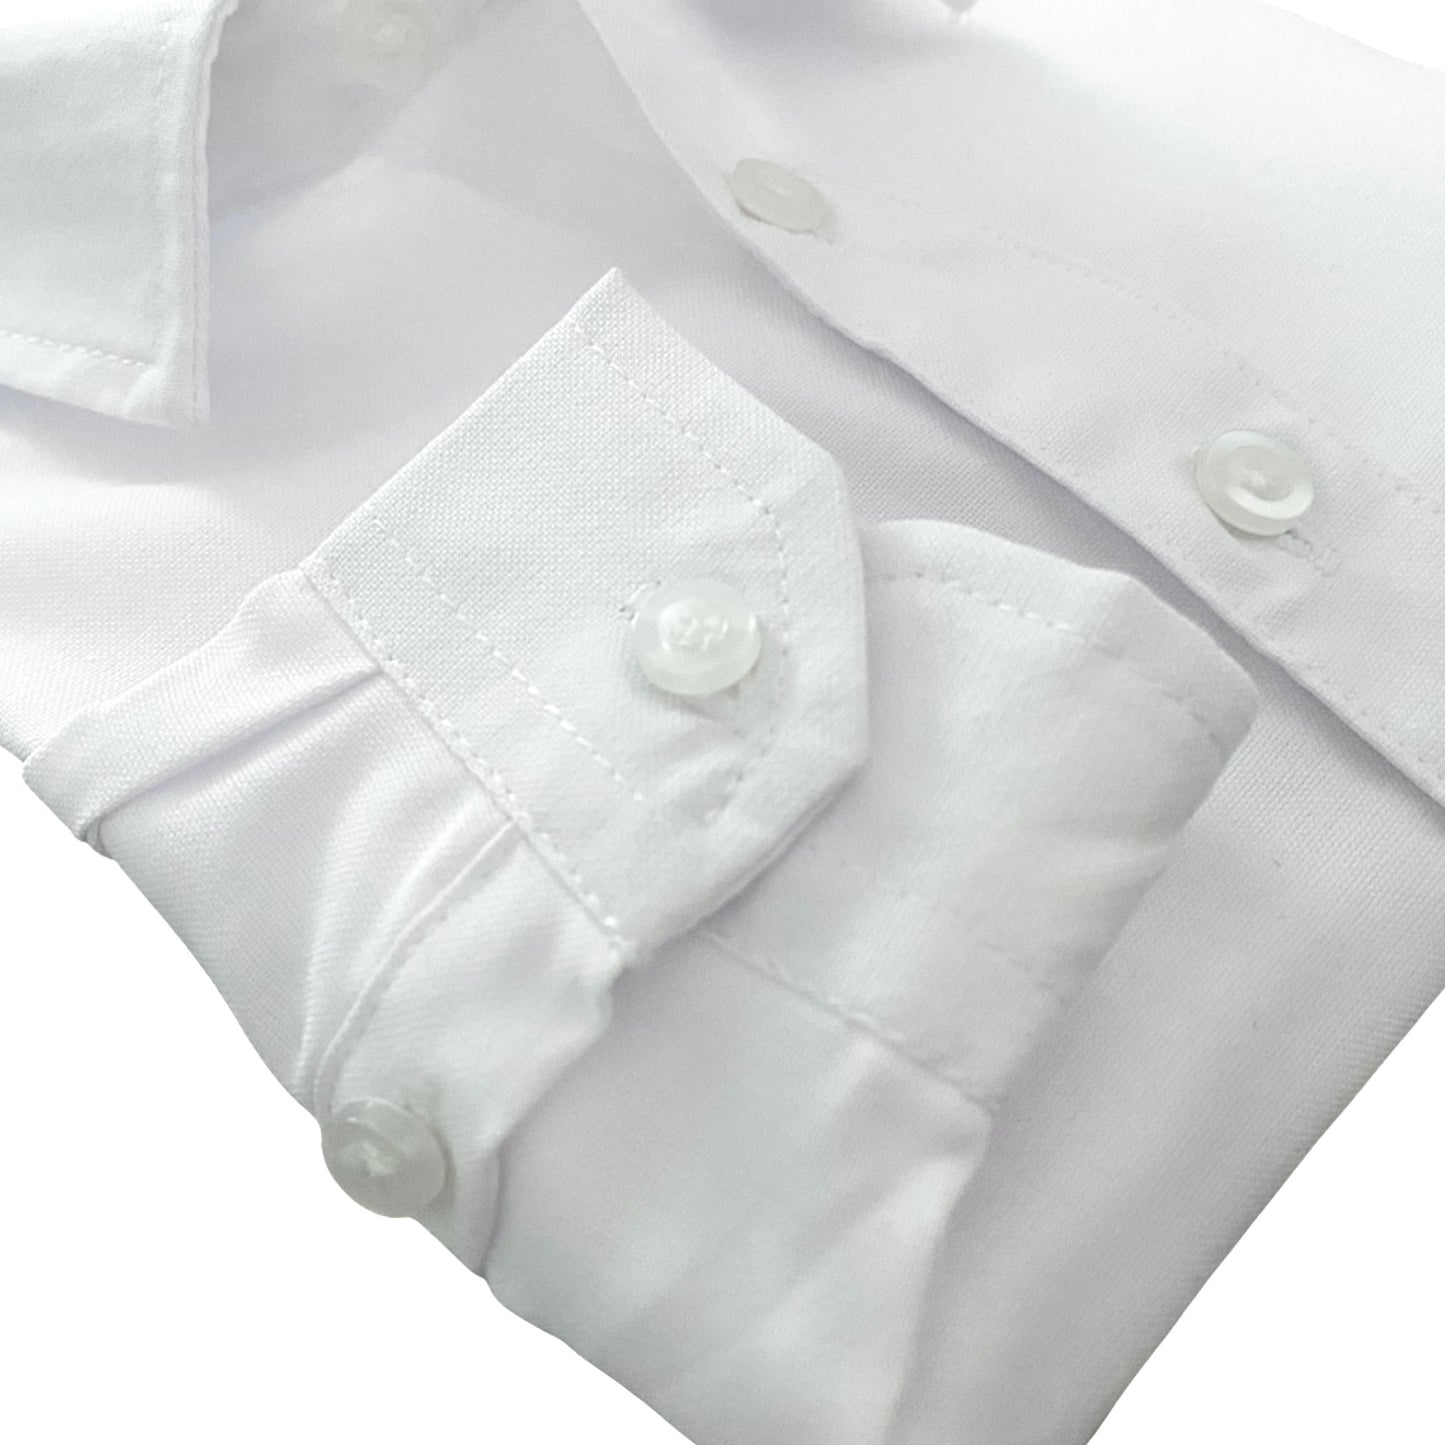 Boys Classic White Shirt